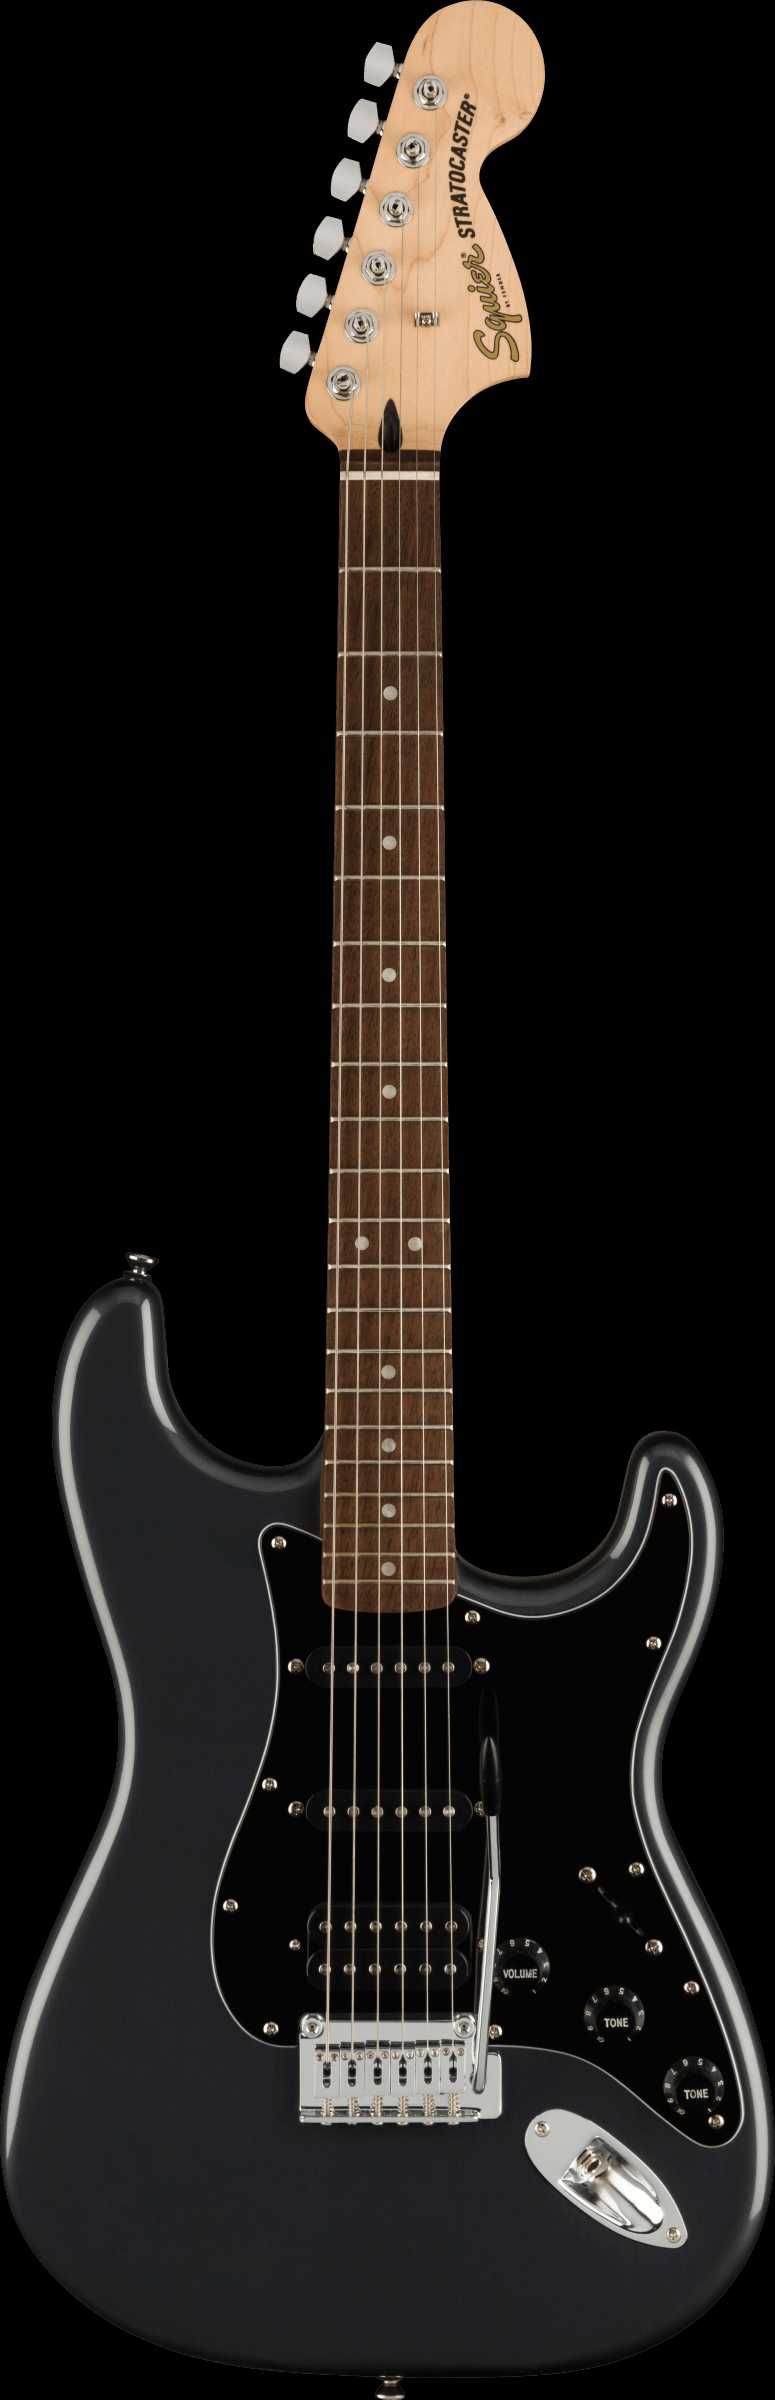 Gitara elektryczna Squier by Fender seria Affinity Stratocaster